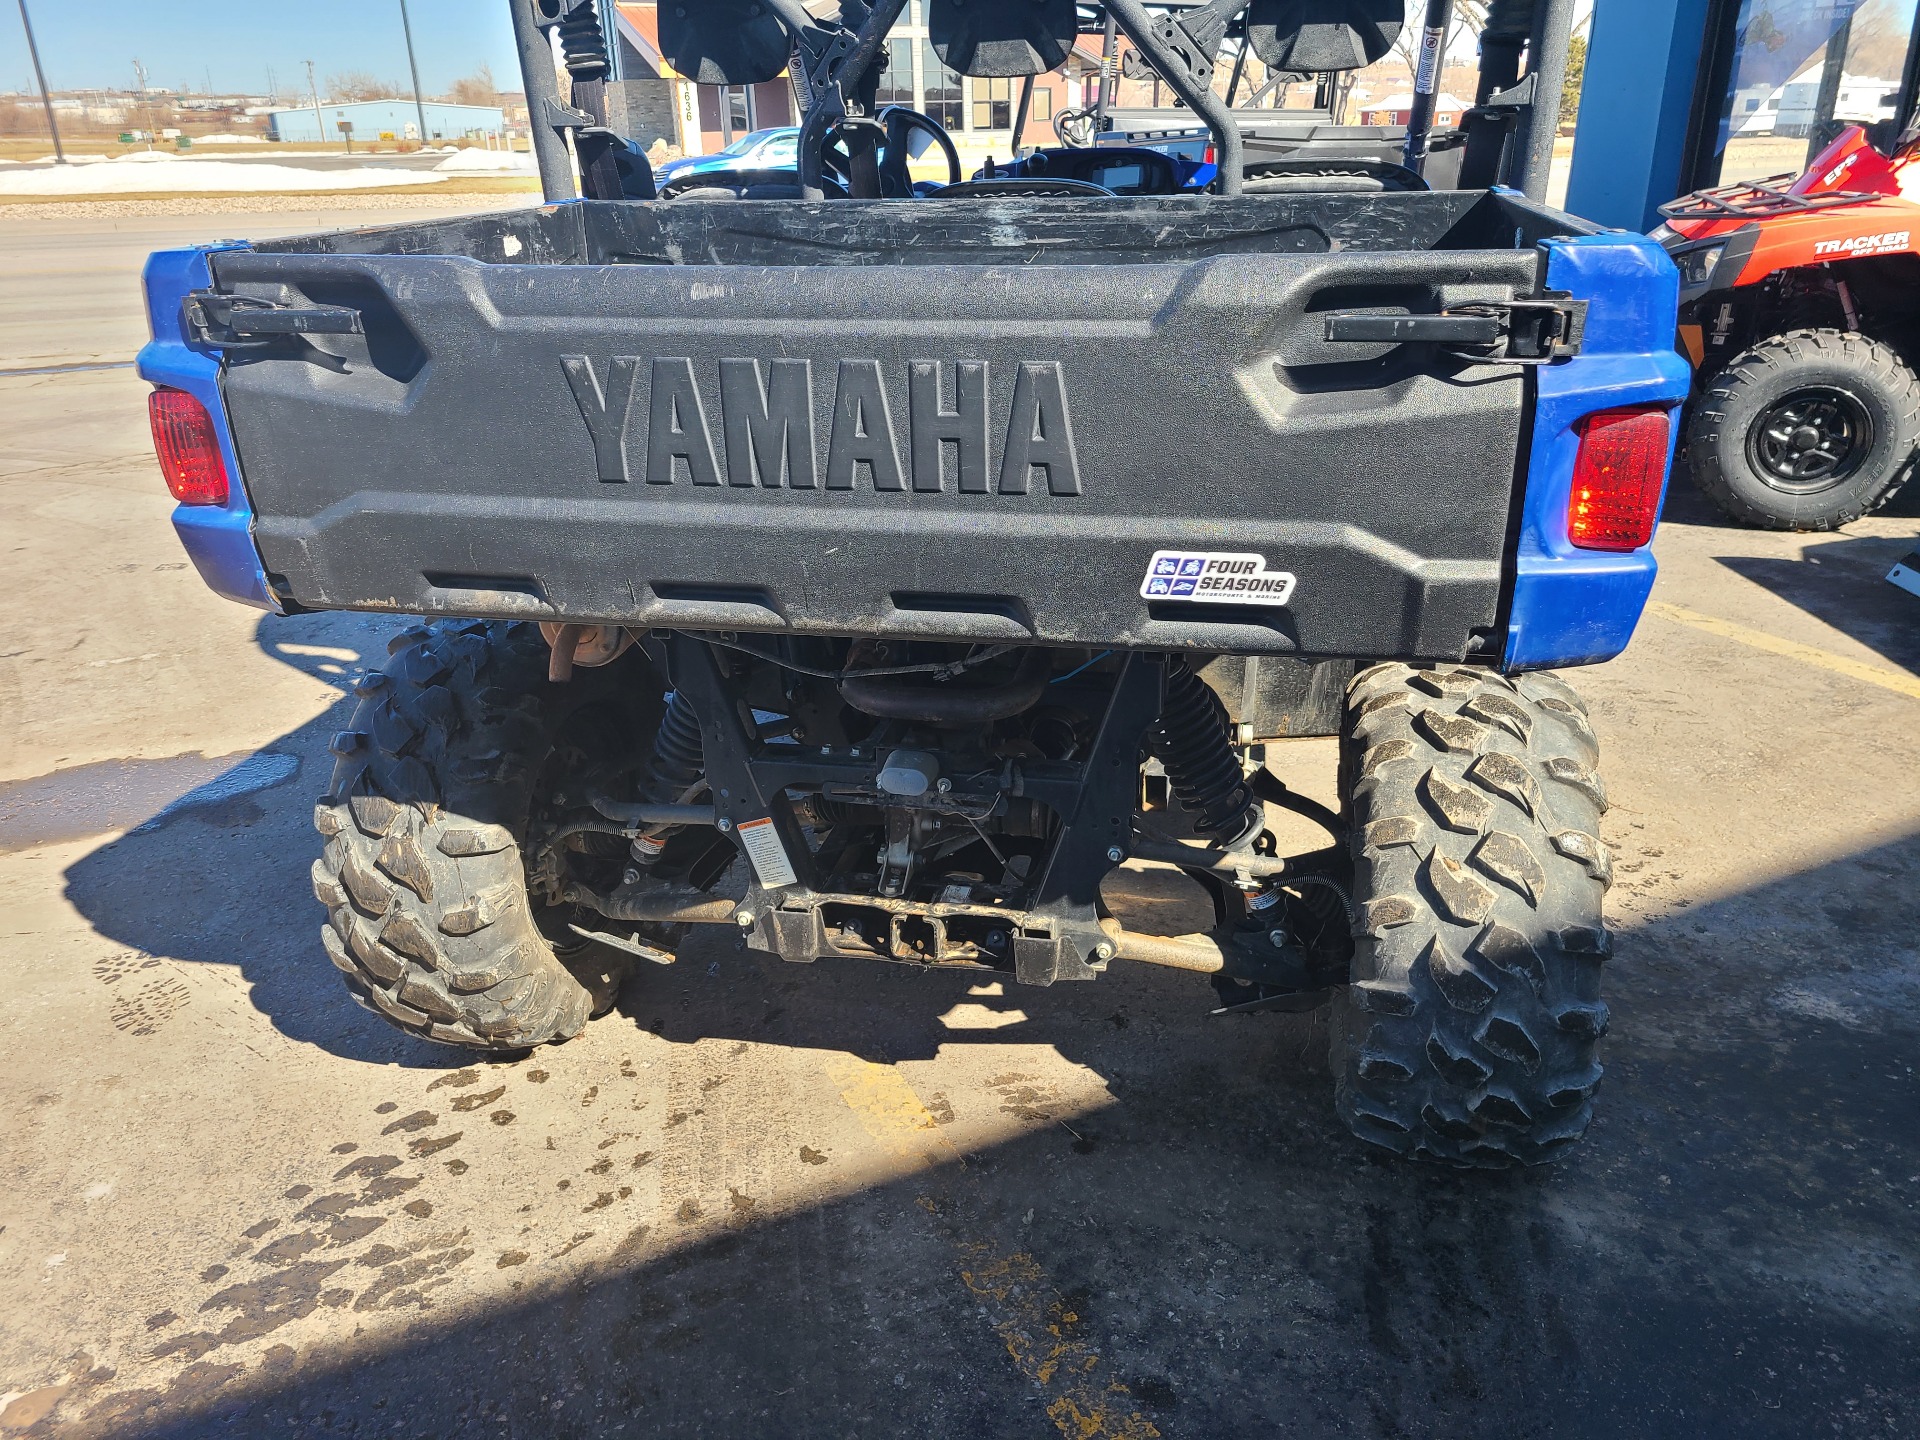 2014 Yamaha Viking EPS in Rapid City, South Dakota - Photo 6